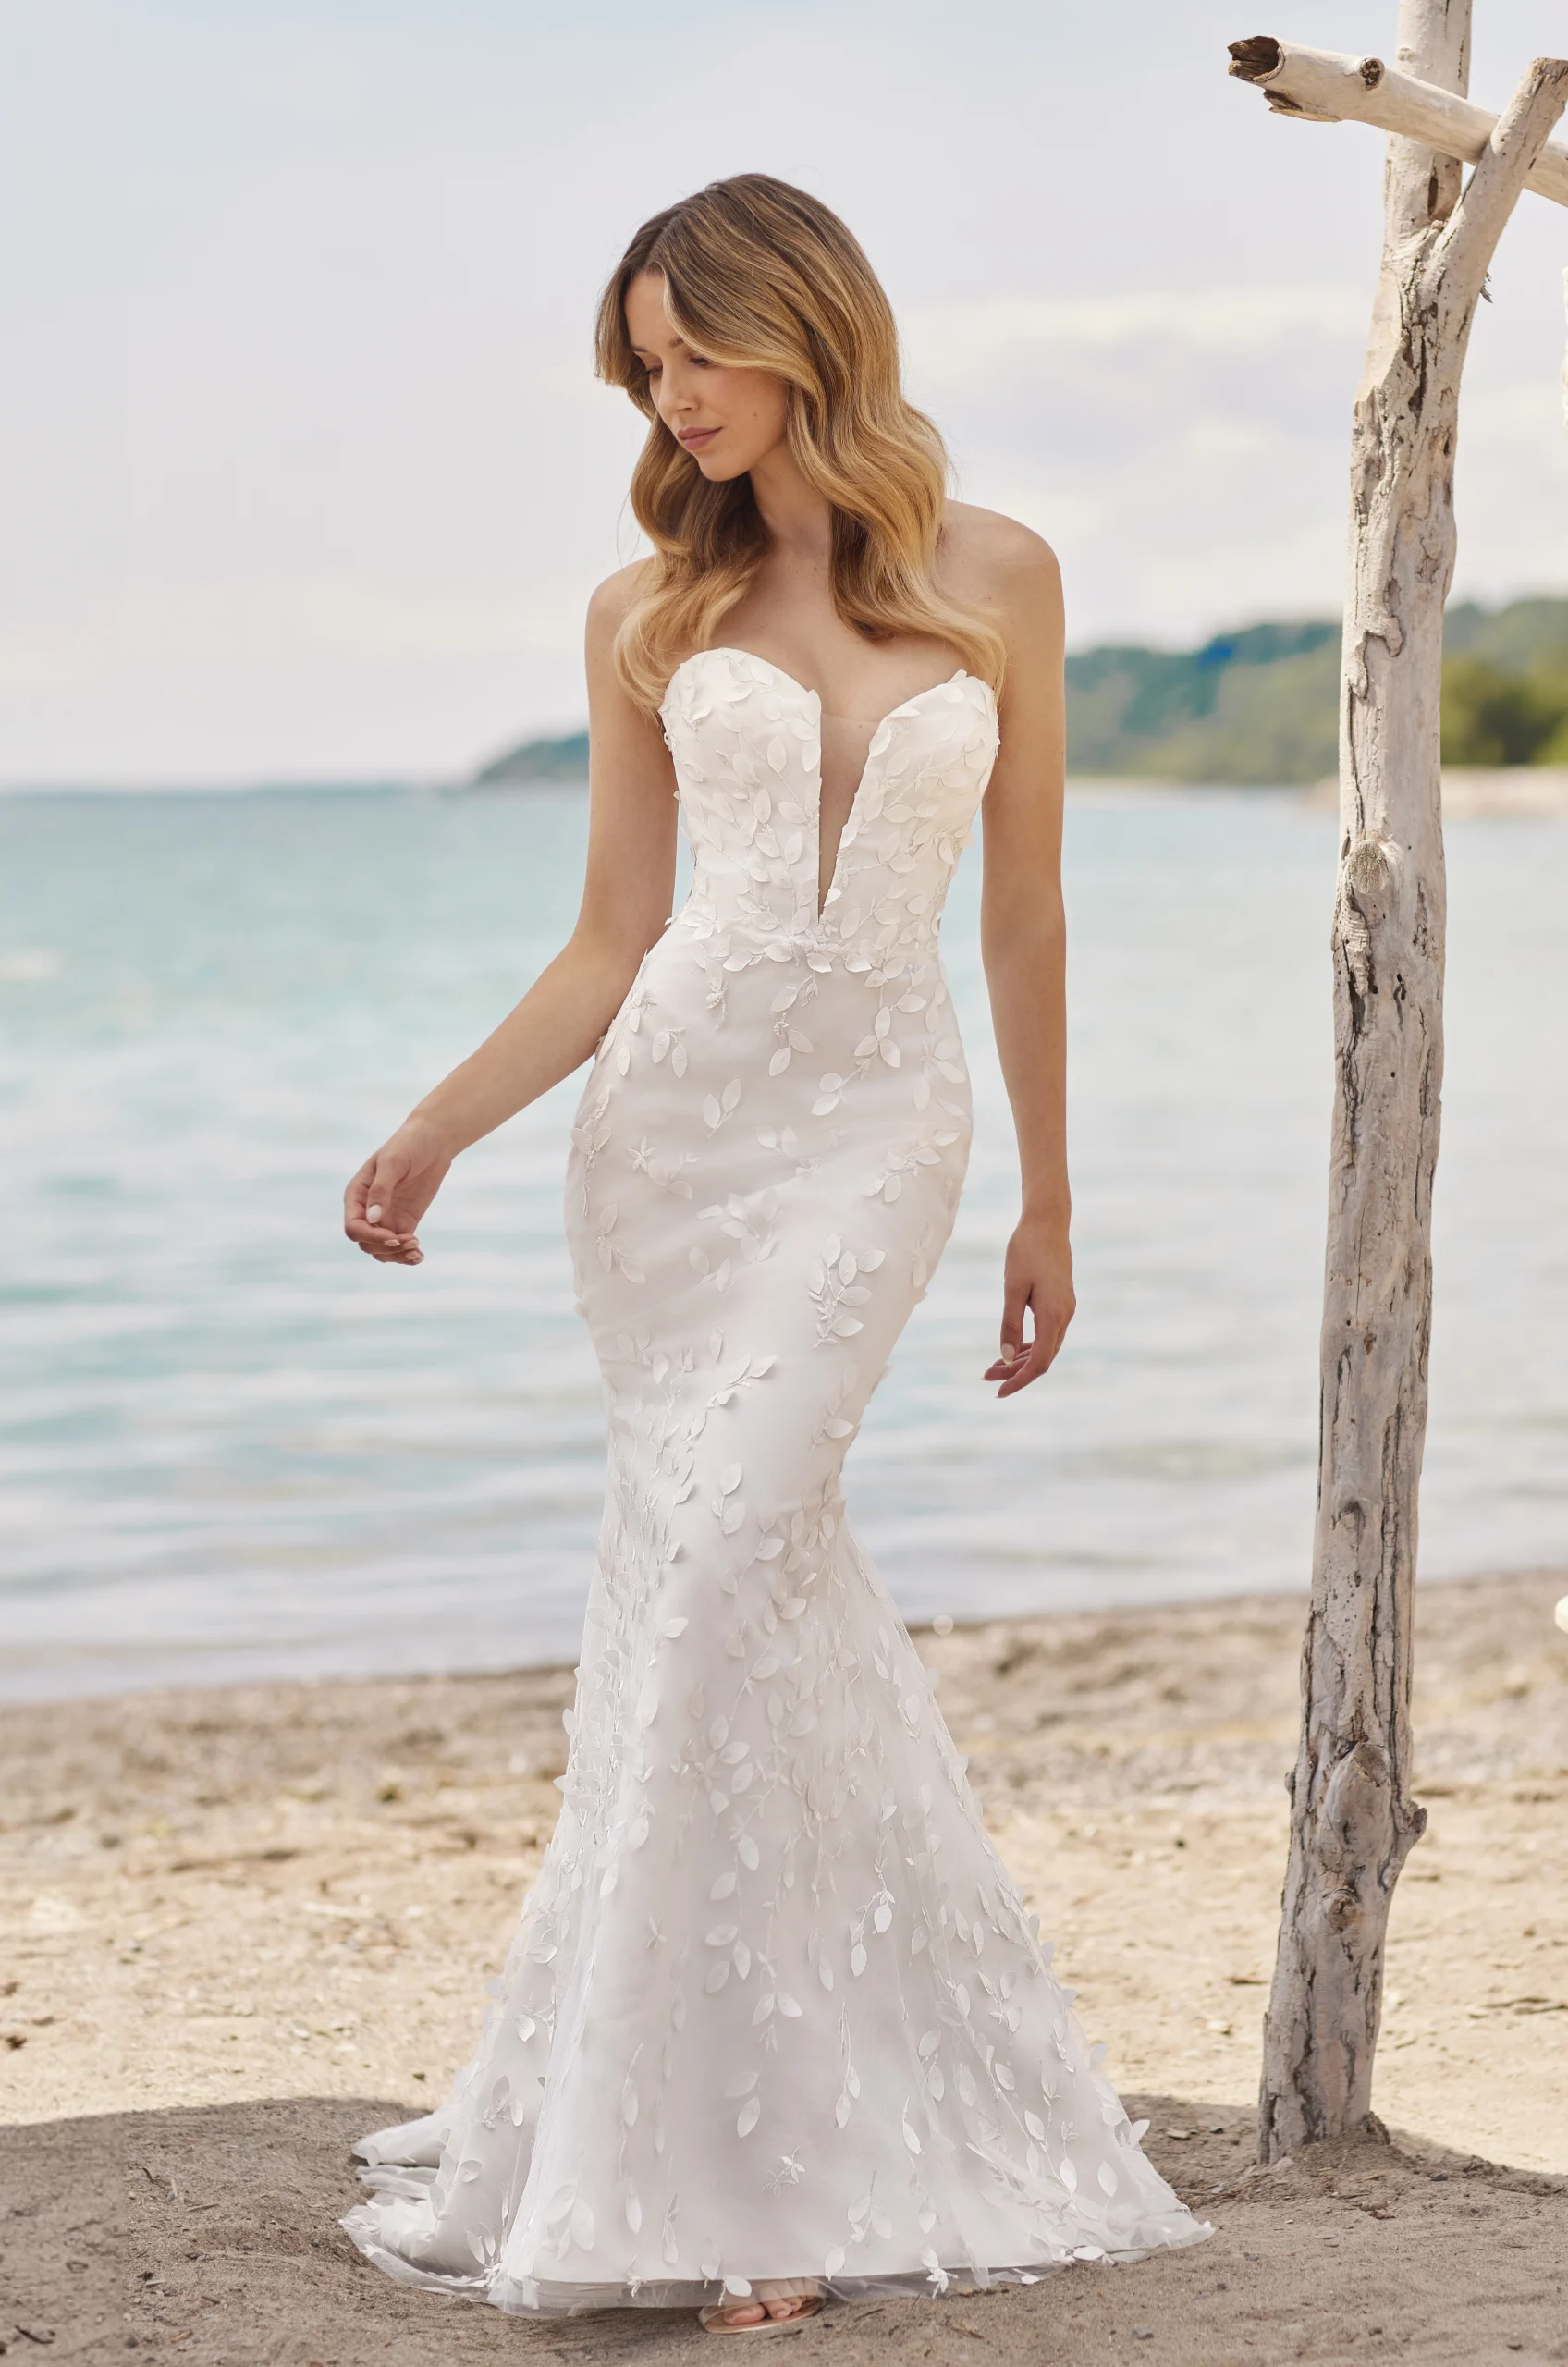 Stunning Strapless Lace Wedding Dress - Style #M2481 | Mikaella Bridal